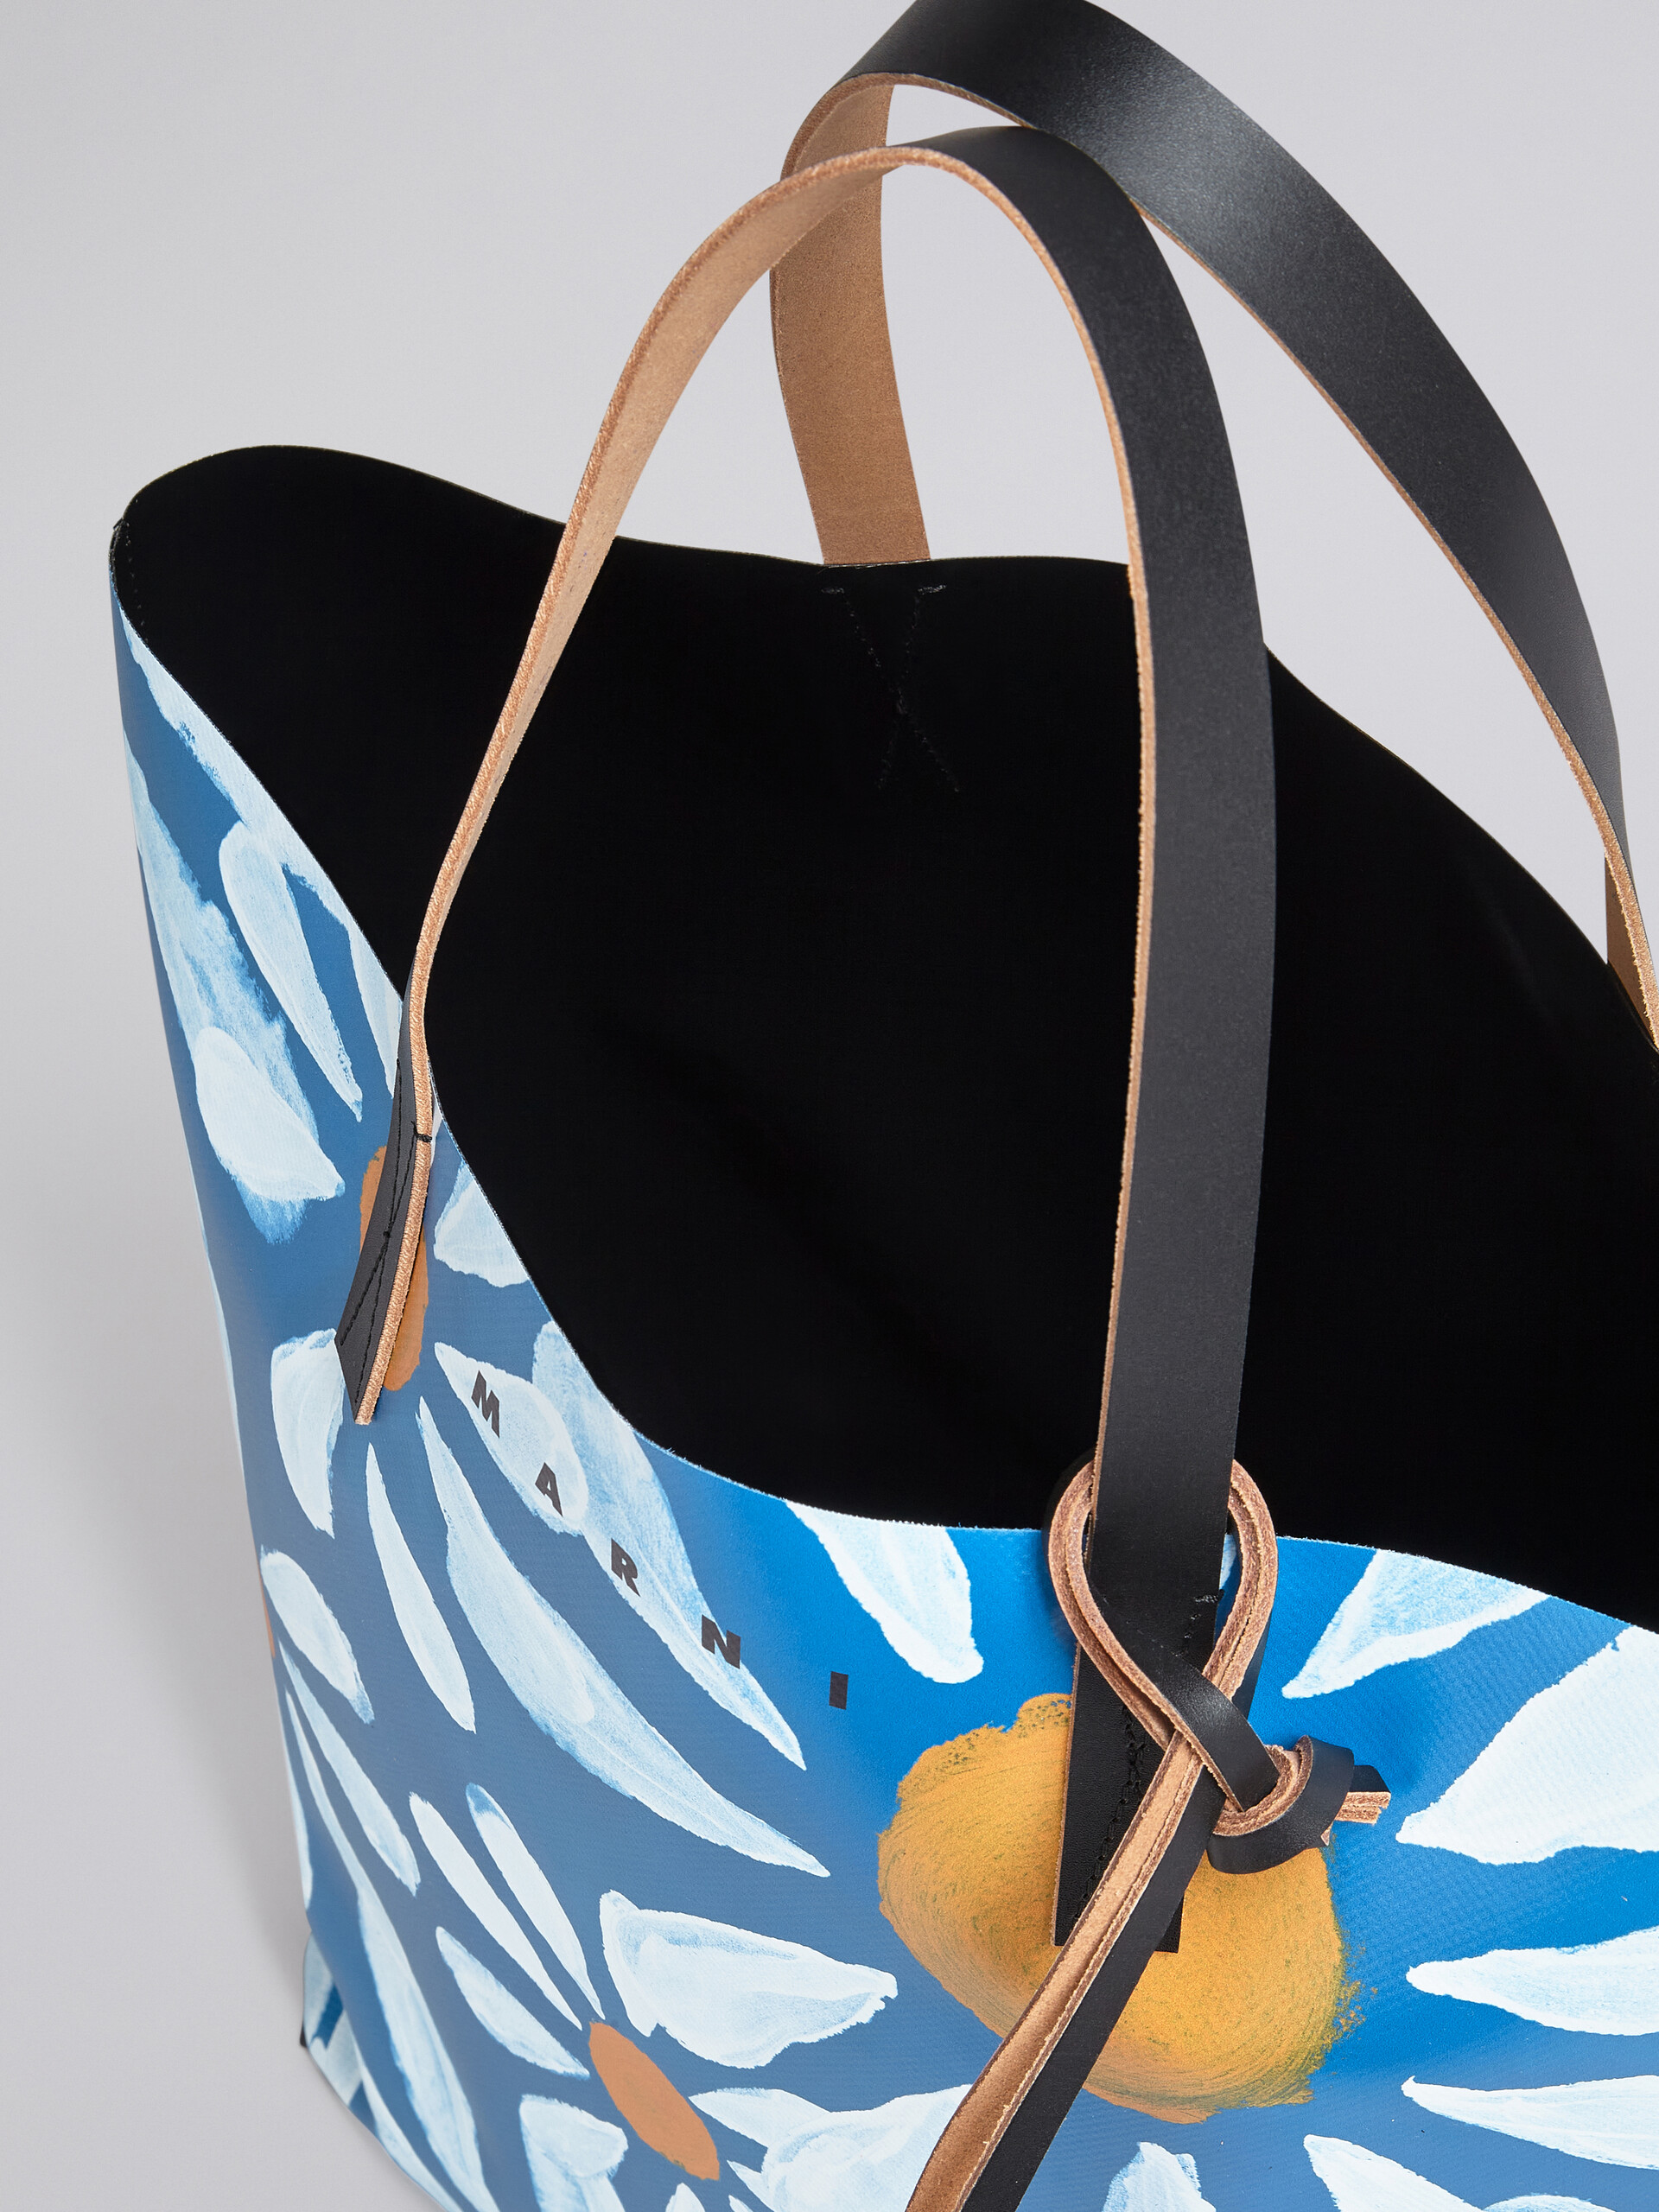 Euphoria print TRIBECA shopping bag - Shopping Bags - Image 4